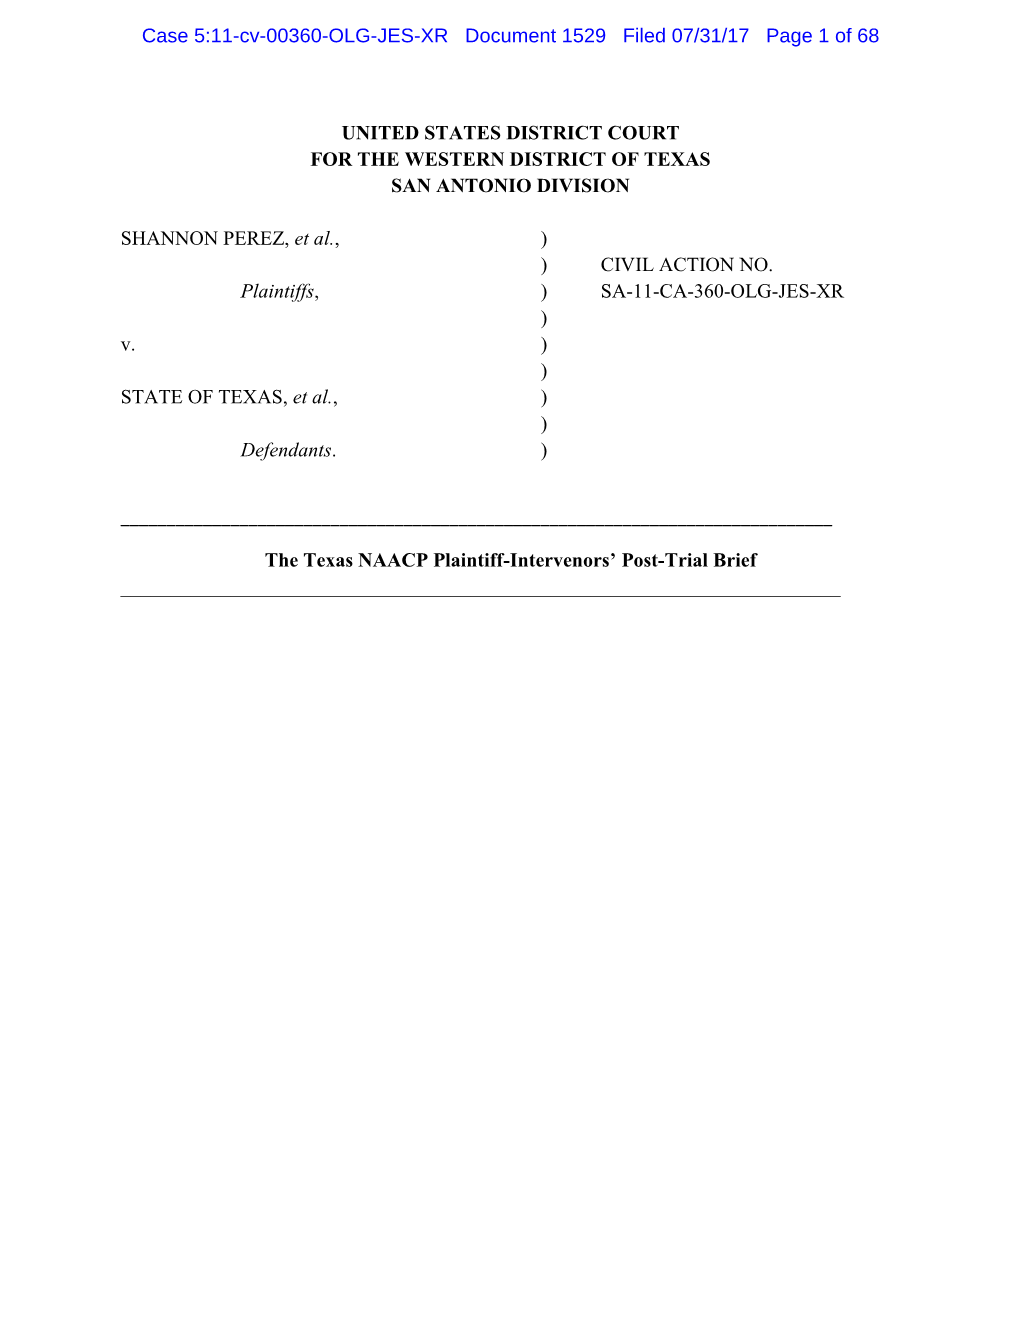 Case 5:11-Cv-00360-OLG-JES-XR Document 1529 Filed 07/31/17 Page 1 of 68